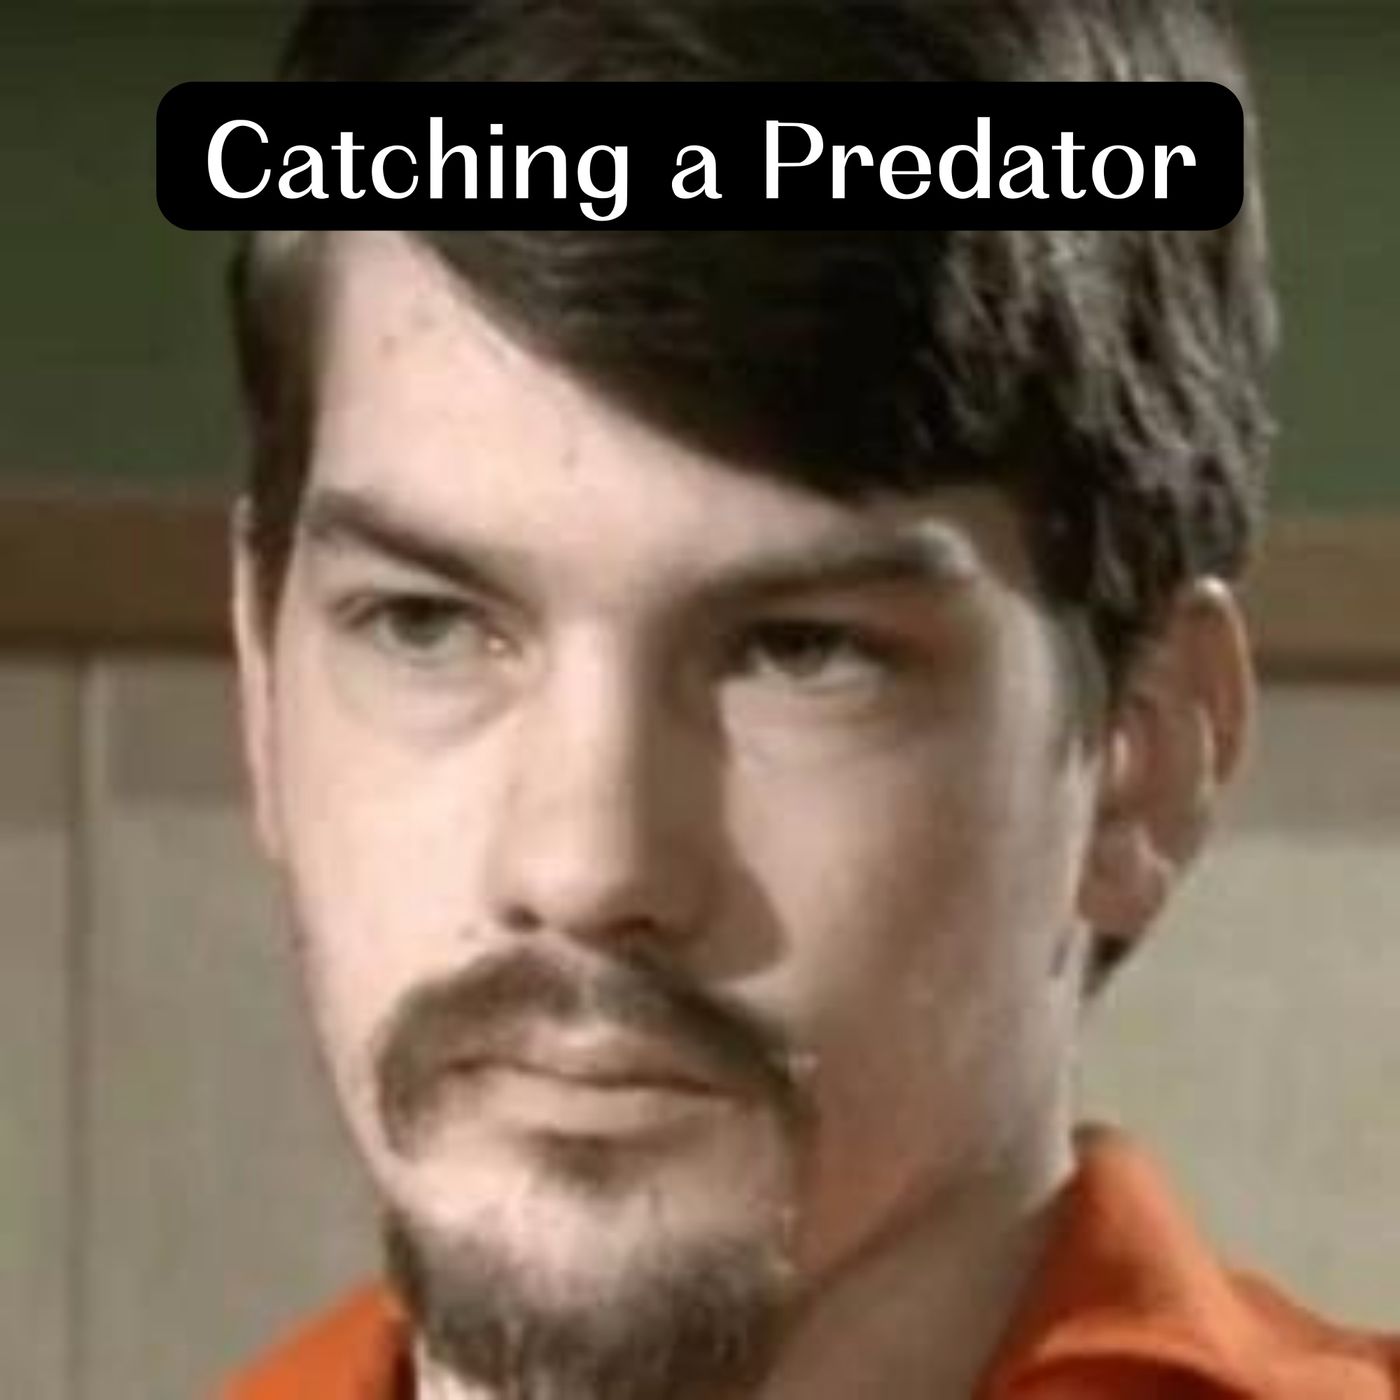 Catching a Predator: Westley Allan Dodd